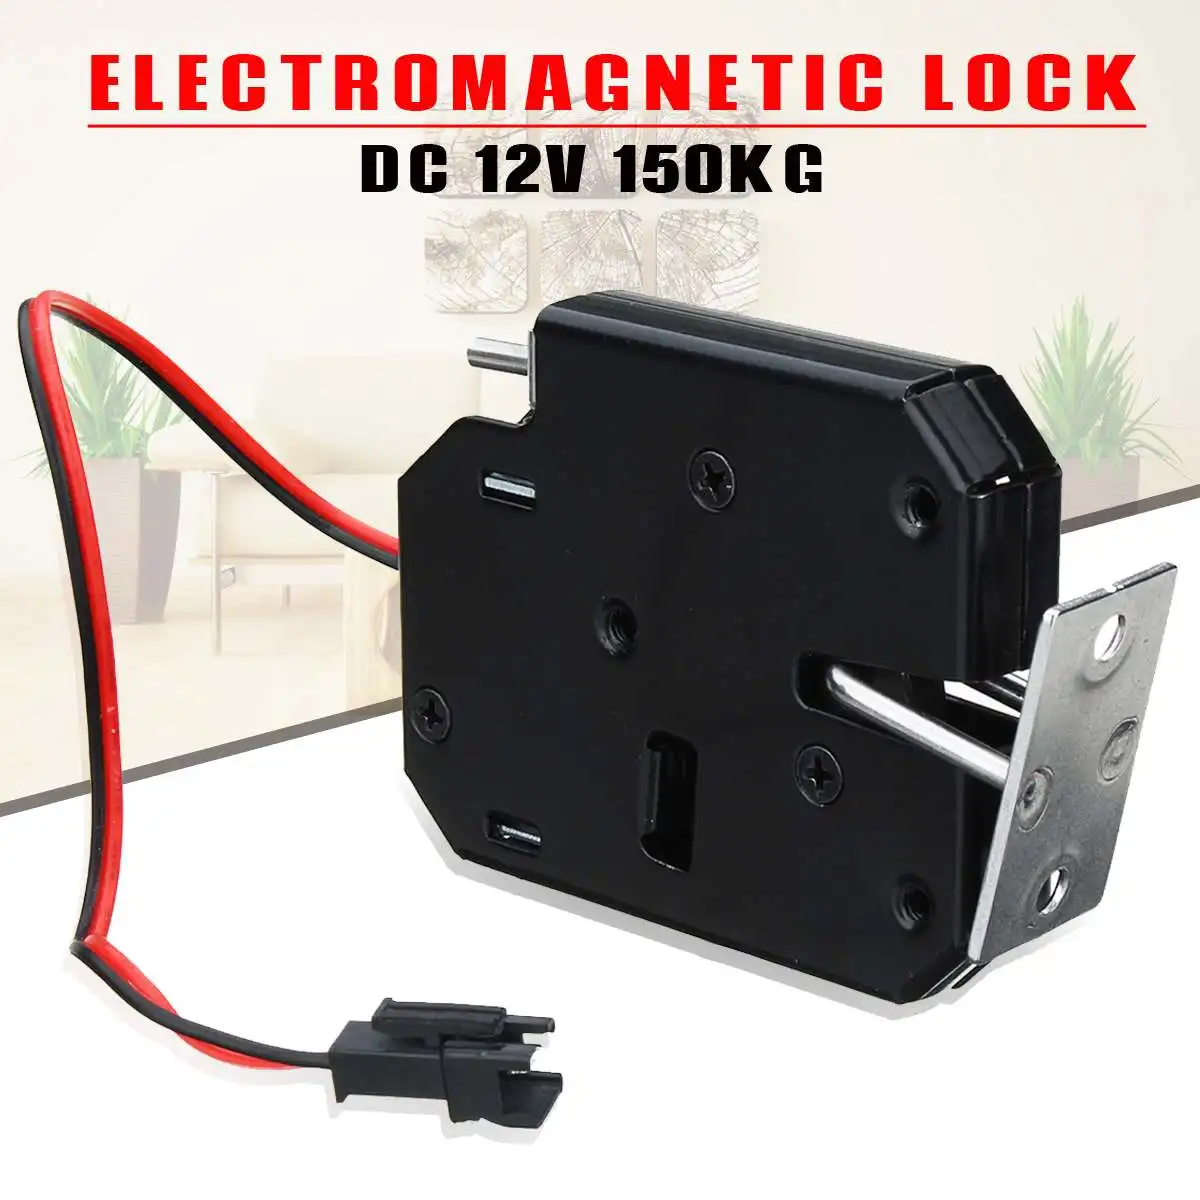 MAGT Electric Strike Lock DC 12V 250KG Electromagnetic Door Lock Intelligent Electric Strike Cathode Lock Cathode Lock for Door Access